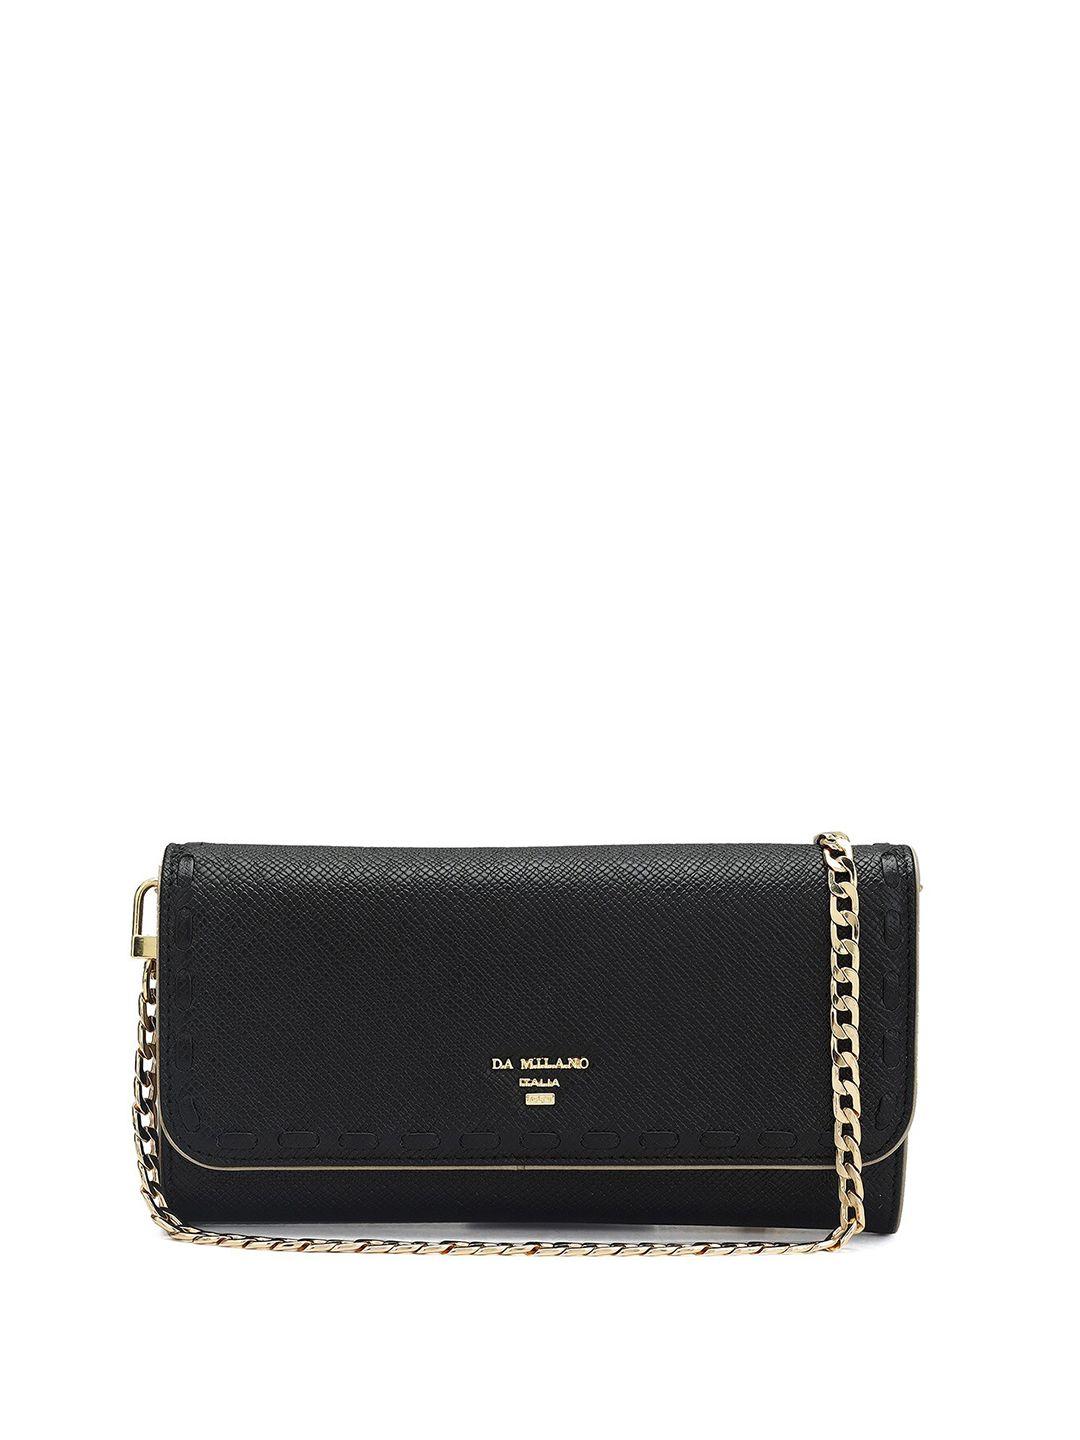 da milano women textured leather purse